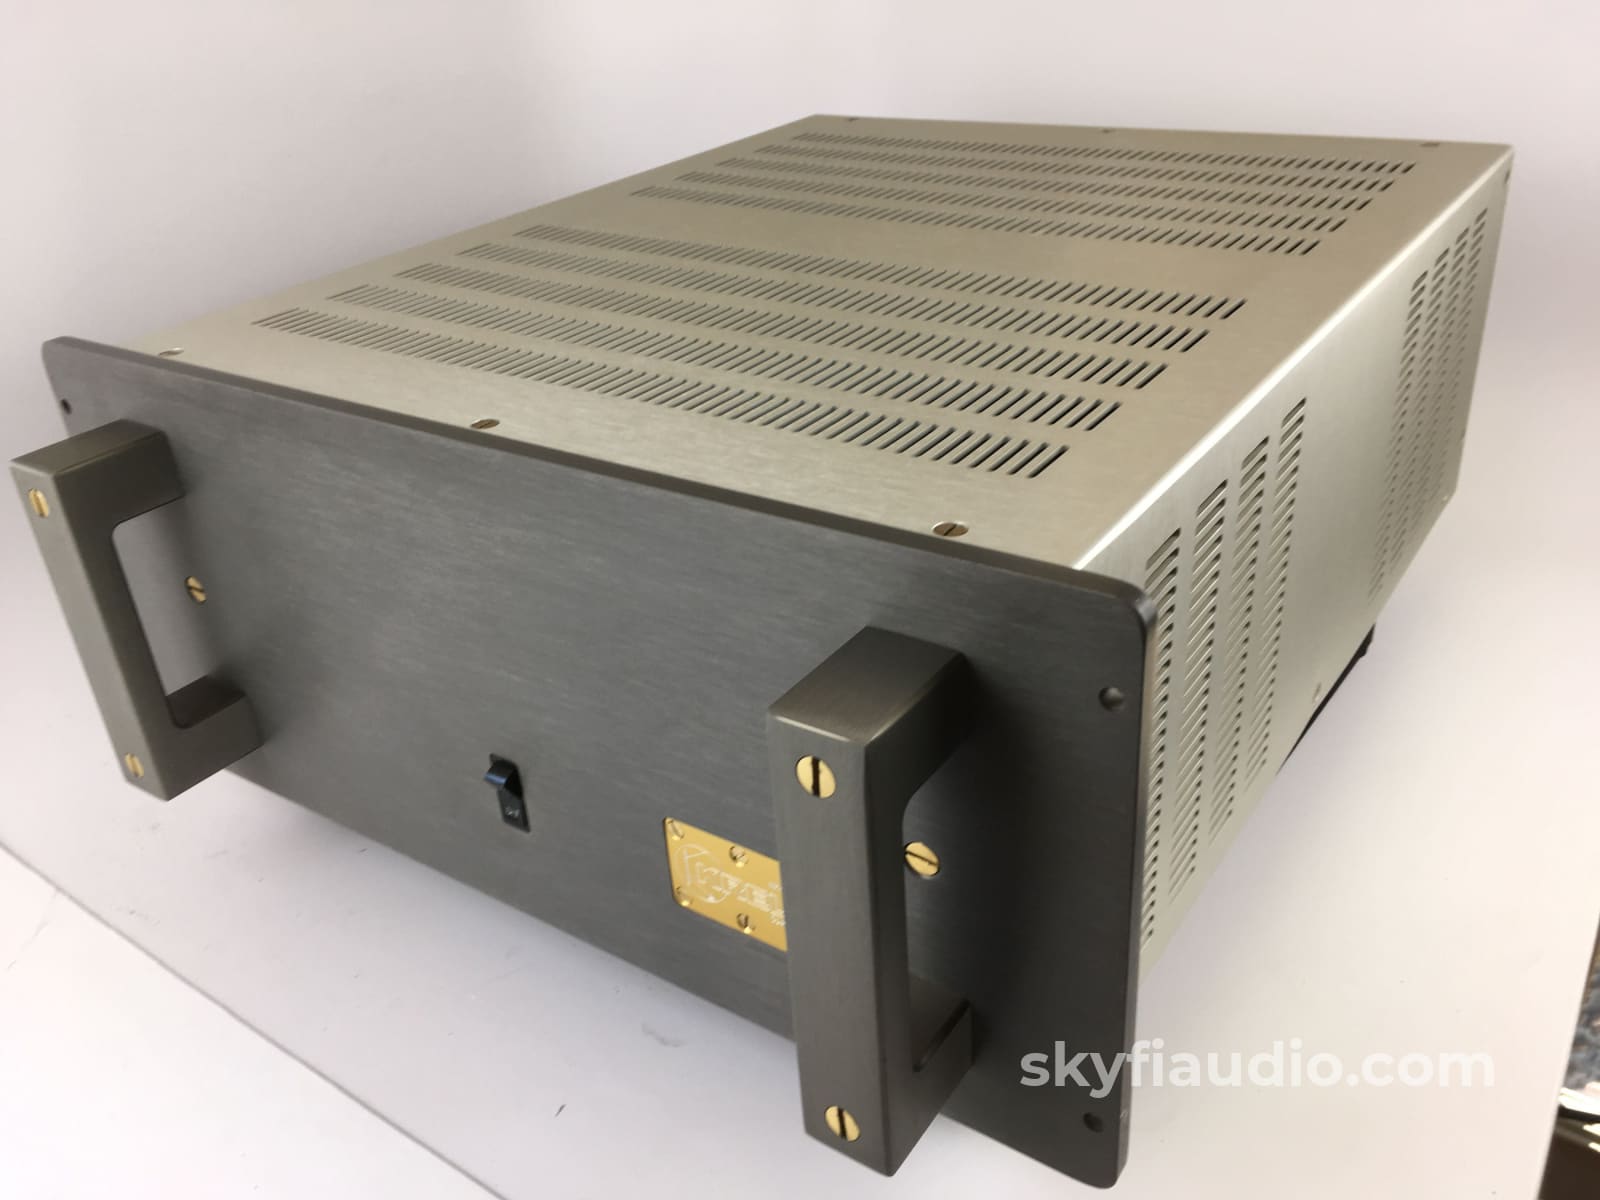 Krell Ksa-100 Mk-2 - Class A Stereo Solid State Amplifier